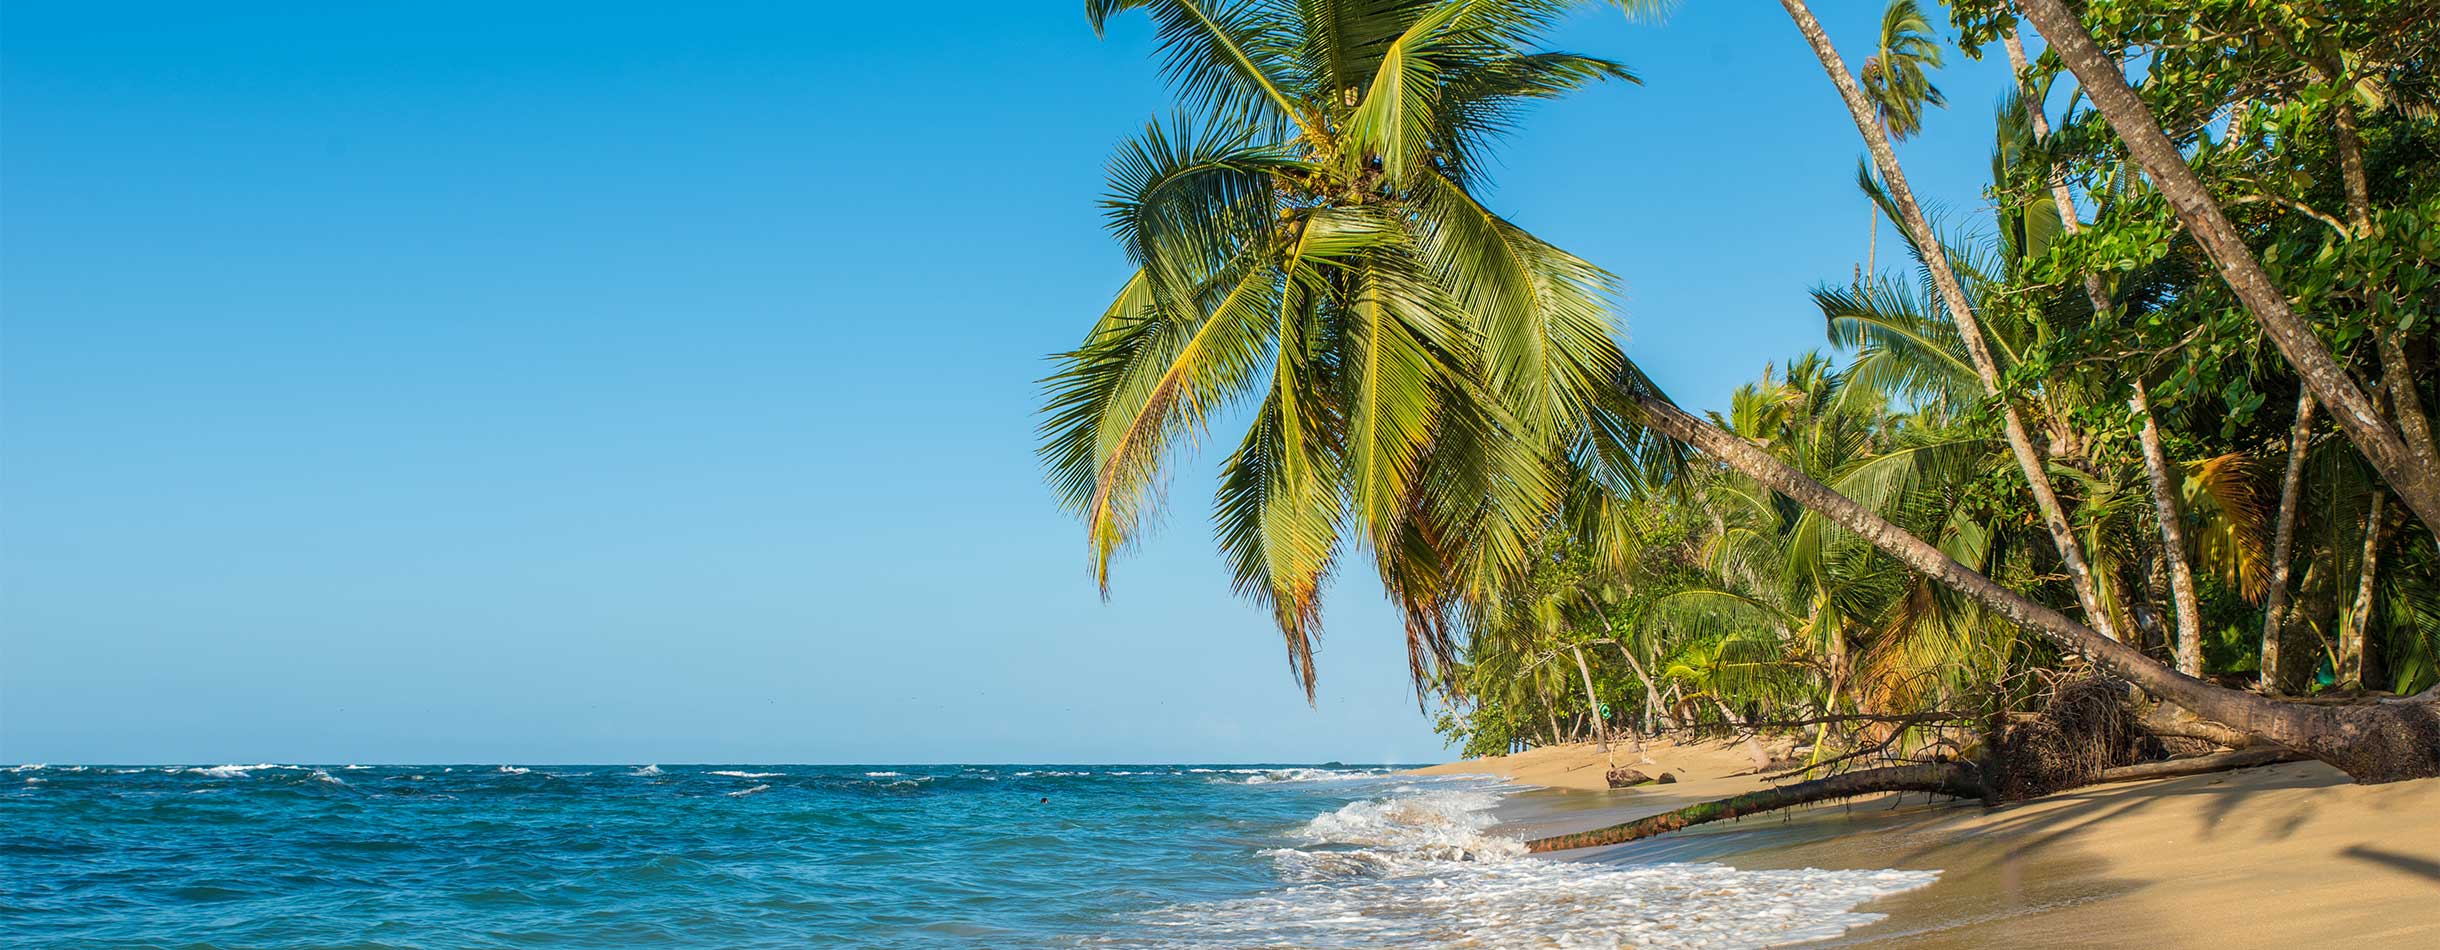 Beautiful beach with palm tree, Costa Rica